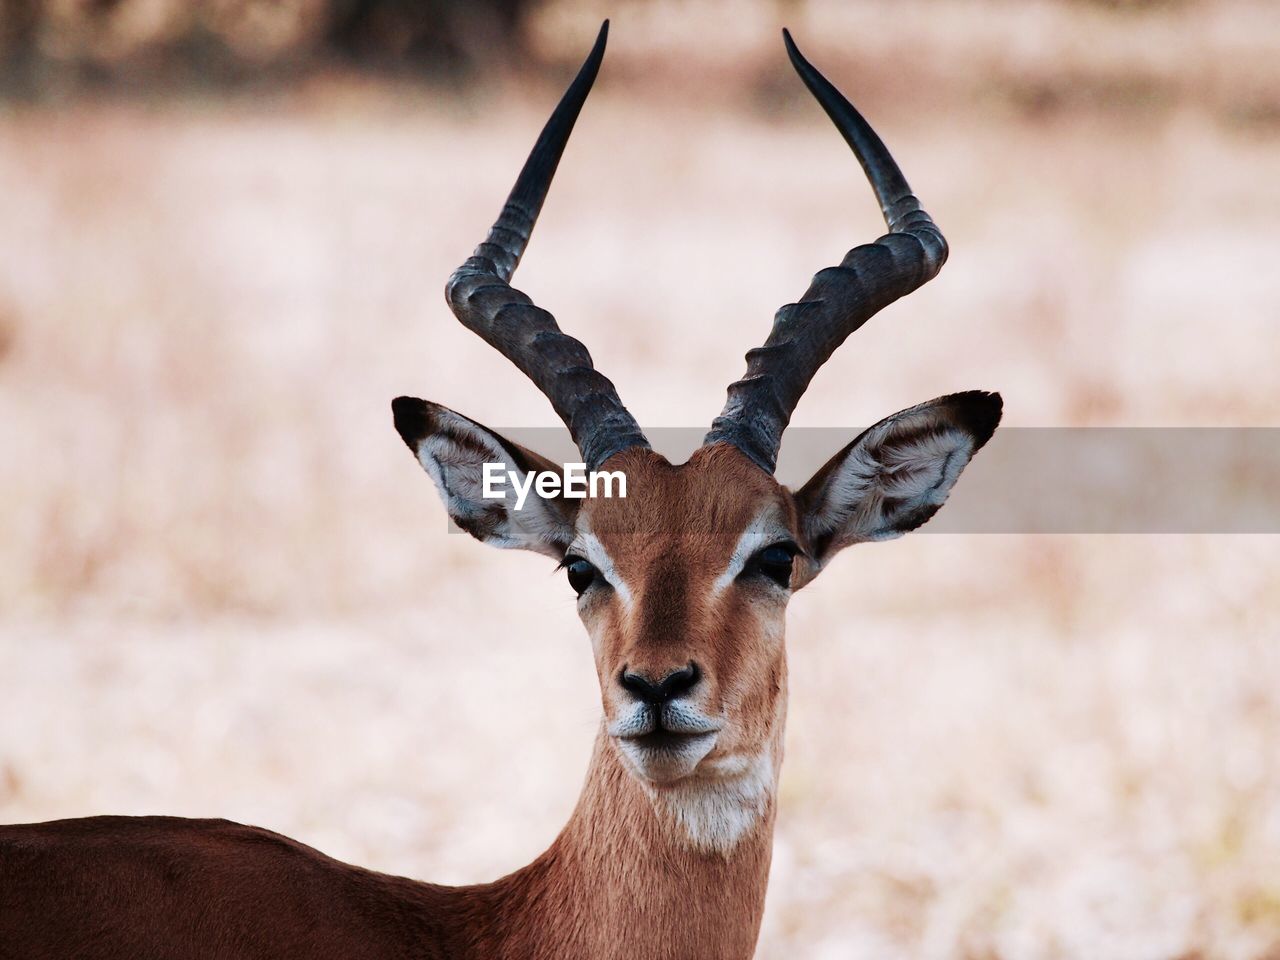 Close-up portrait of impala